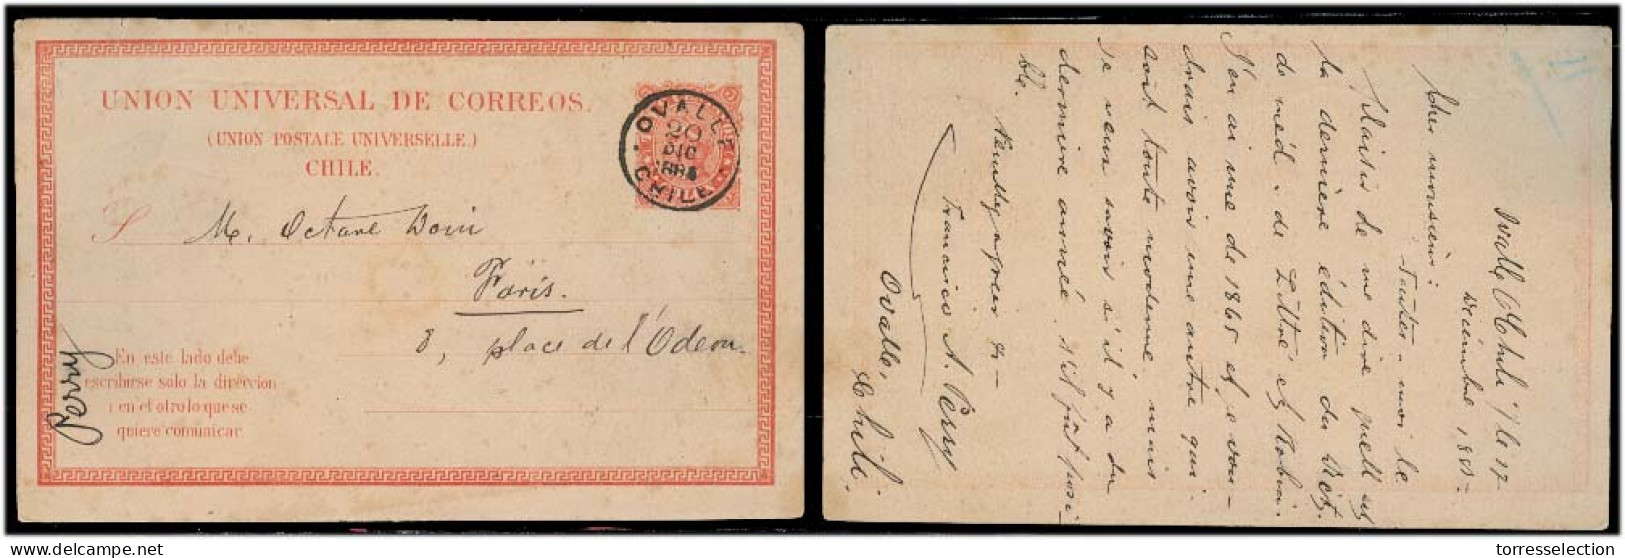 CHILE - Stationery. 1883 (20 Dec). Ovalle - France. 3c Red Stat Card. Proper Usage V Scarce. - Chile